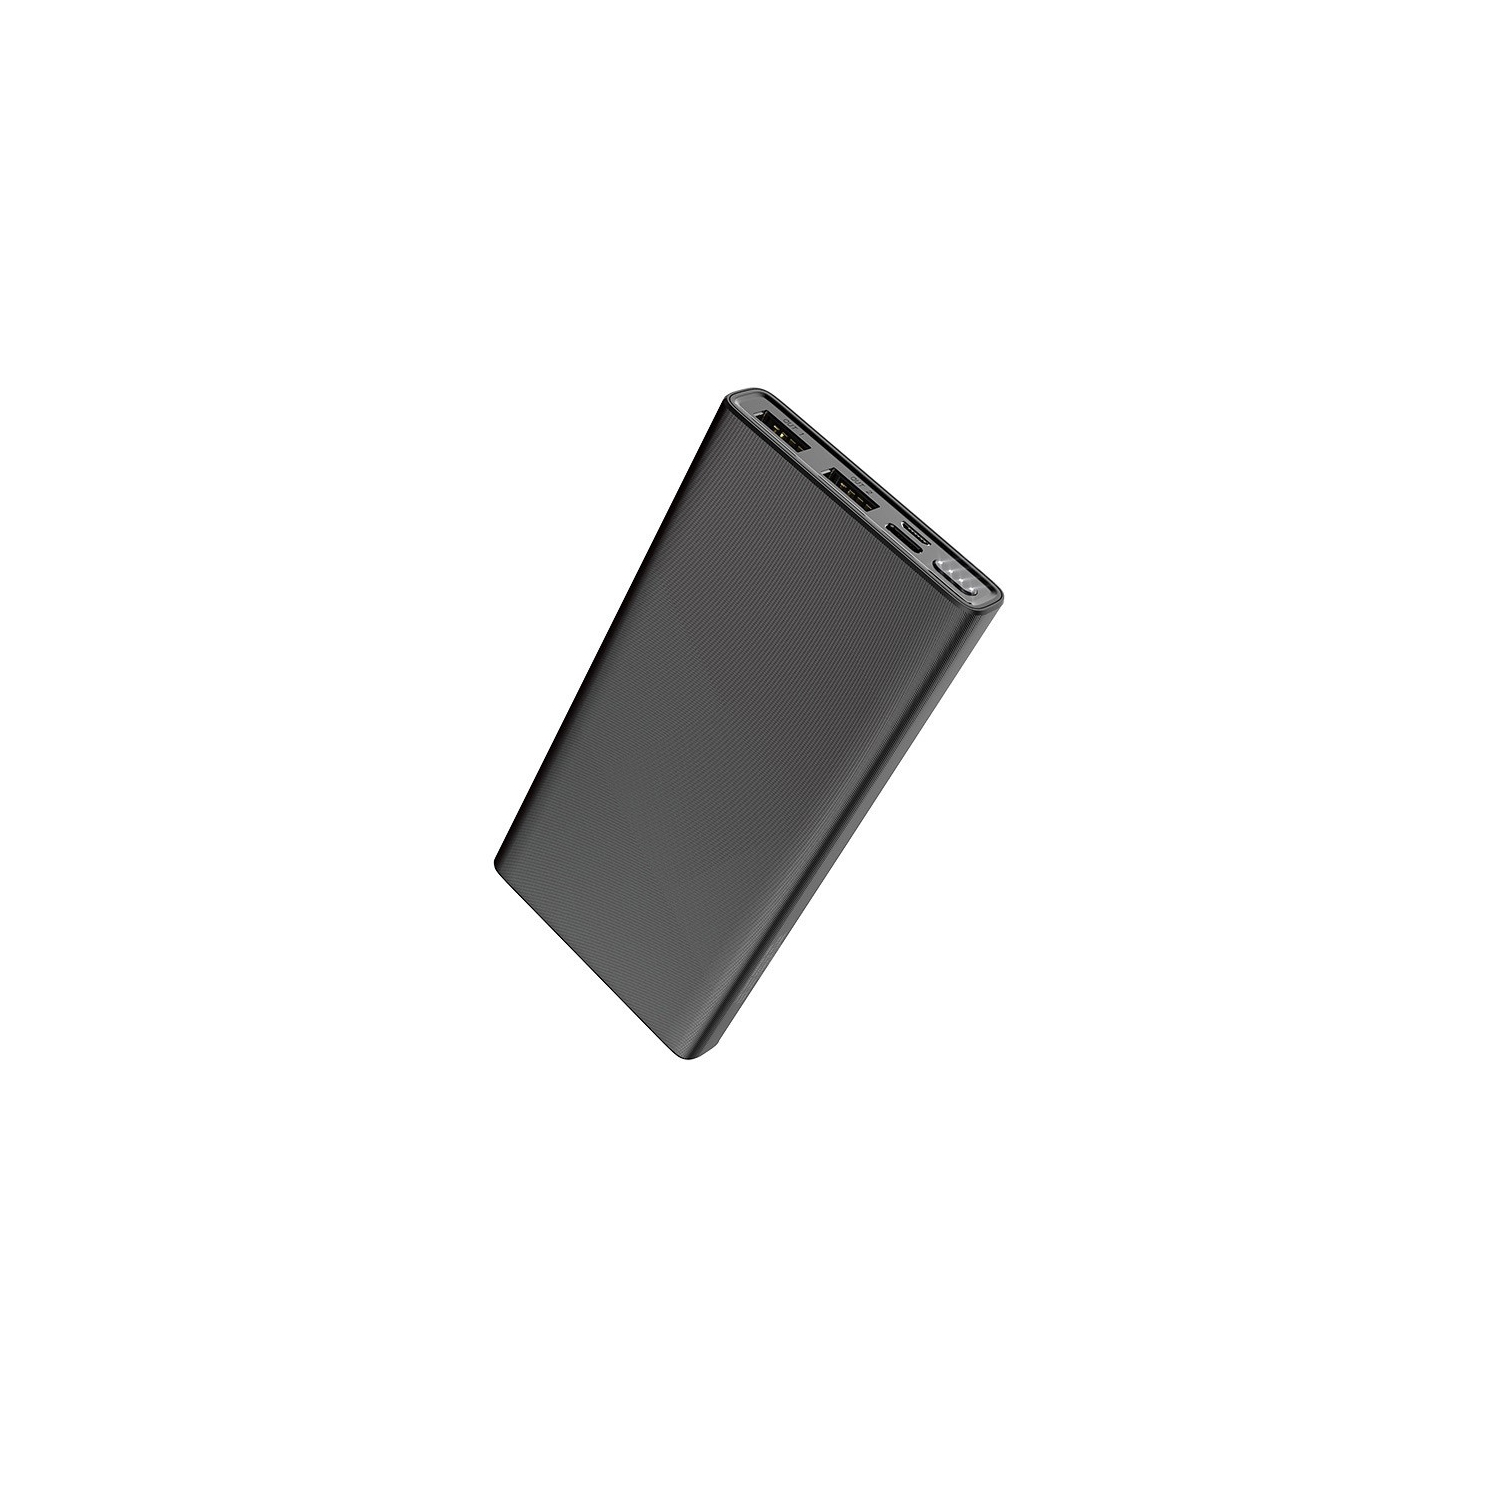 10000mAh Micro USB USB-C External Battery Charger Portable Power Bank for iPhone Samsung iPad Tablets, Black